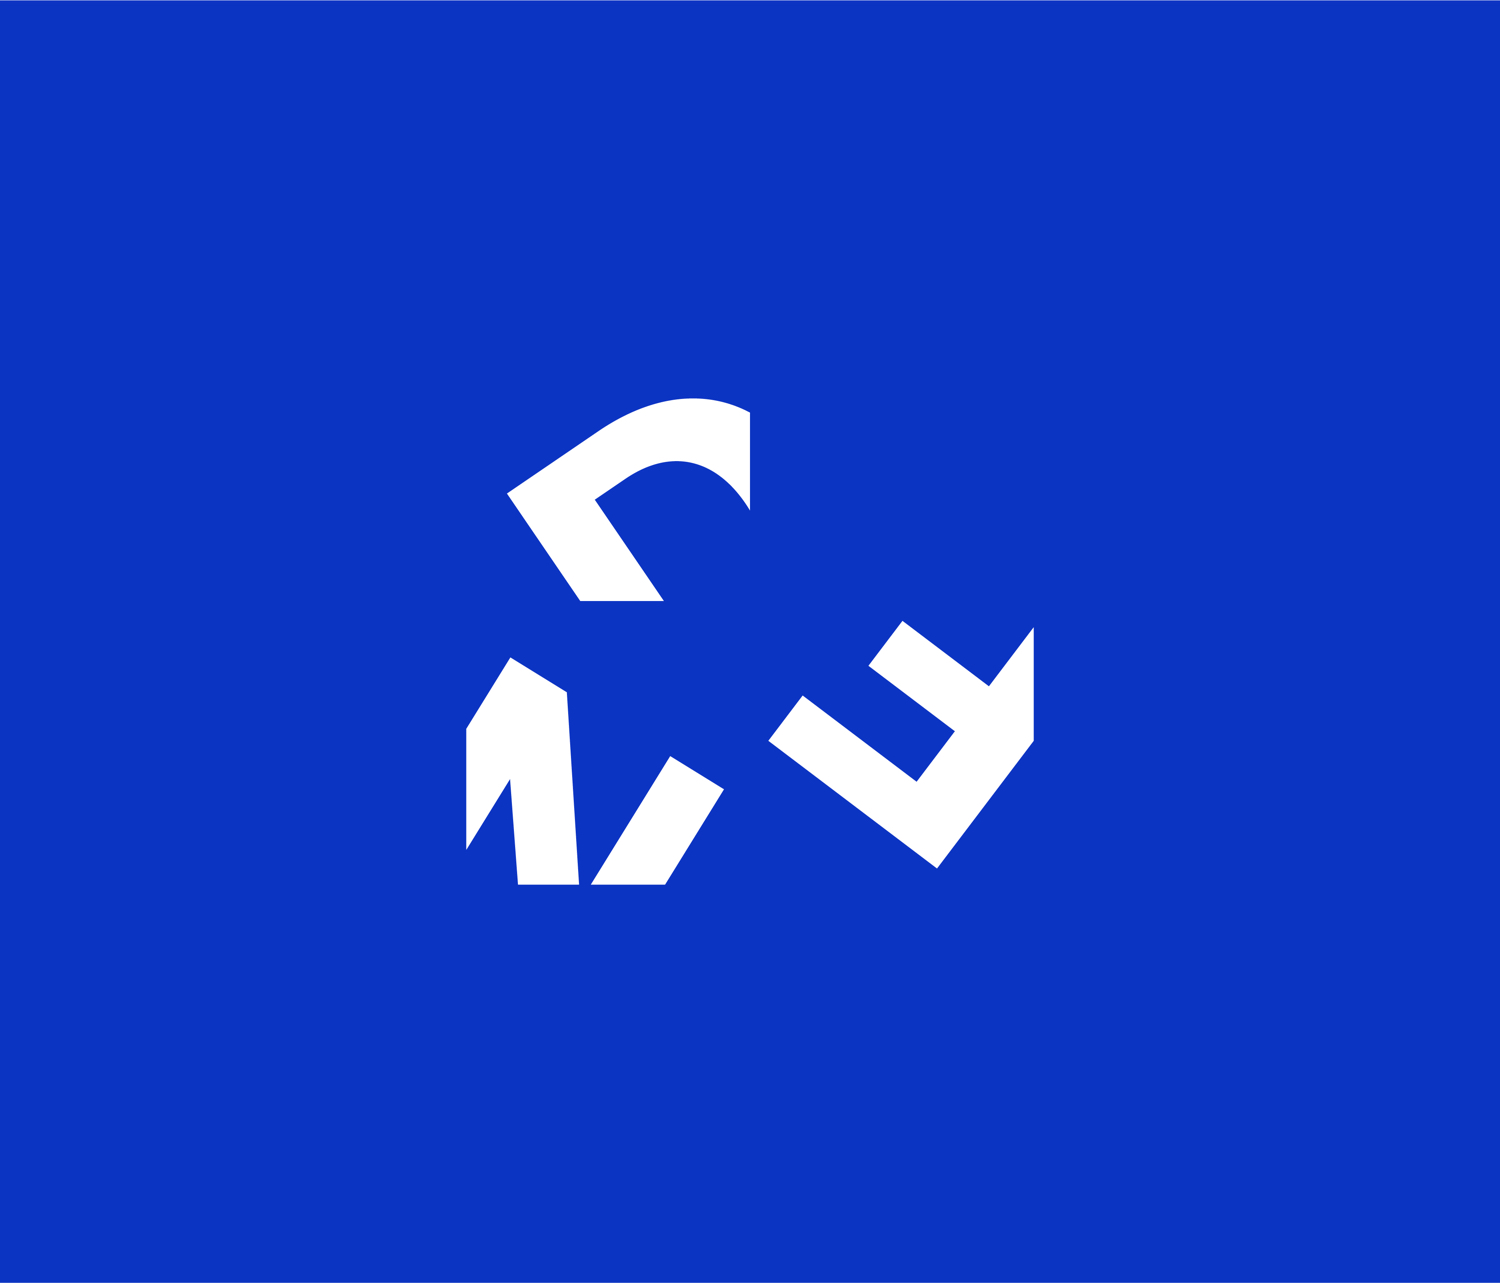 Logo designed by Oslo-based Neue for The Norwegian Film School